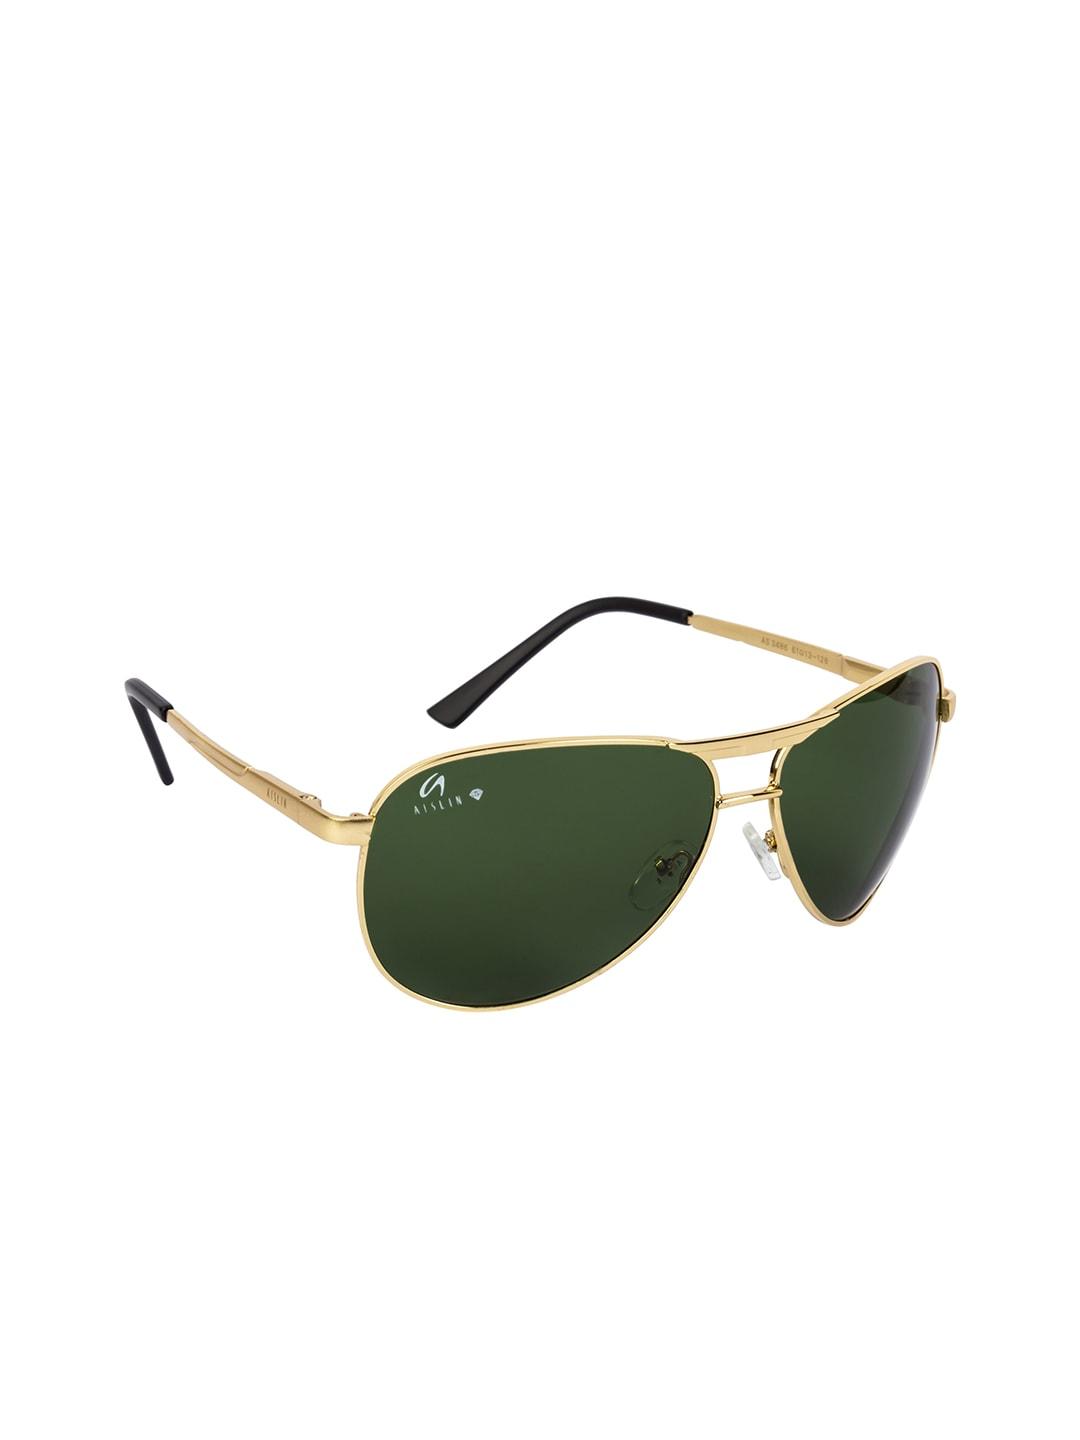 aislin men green lens & gold-toned aviator sunglasses with uv protected lens